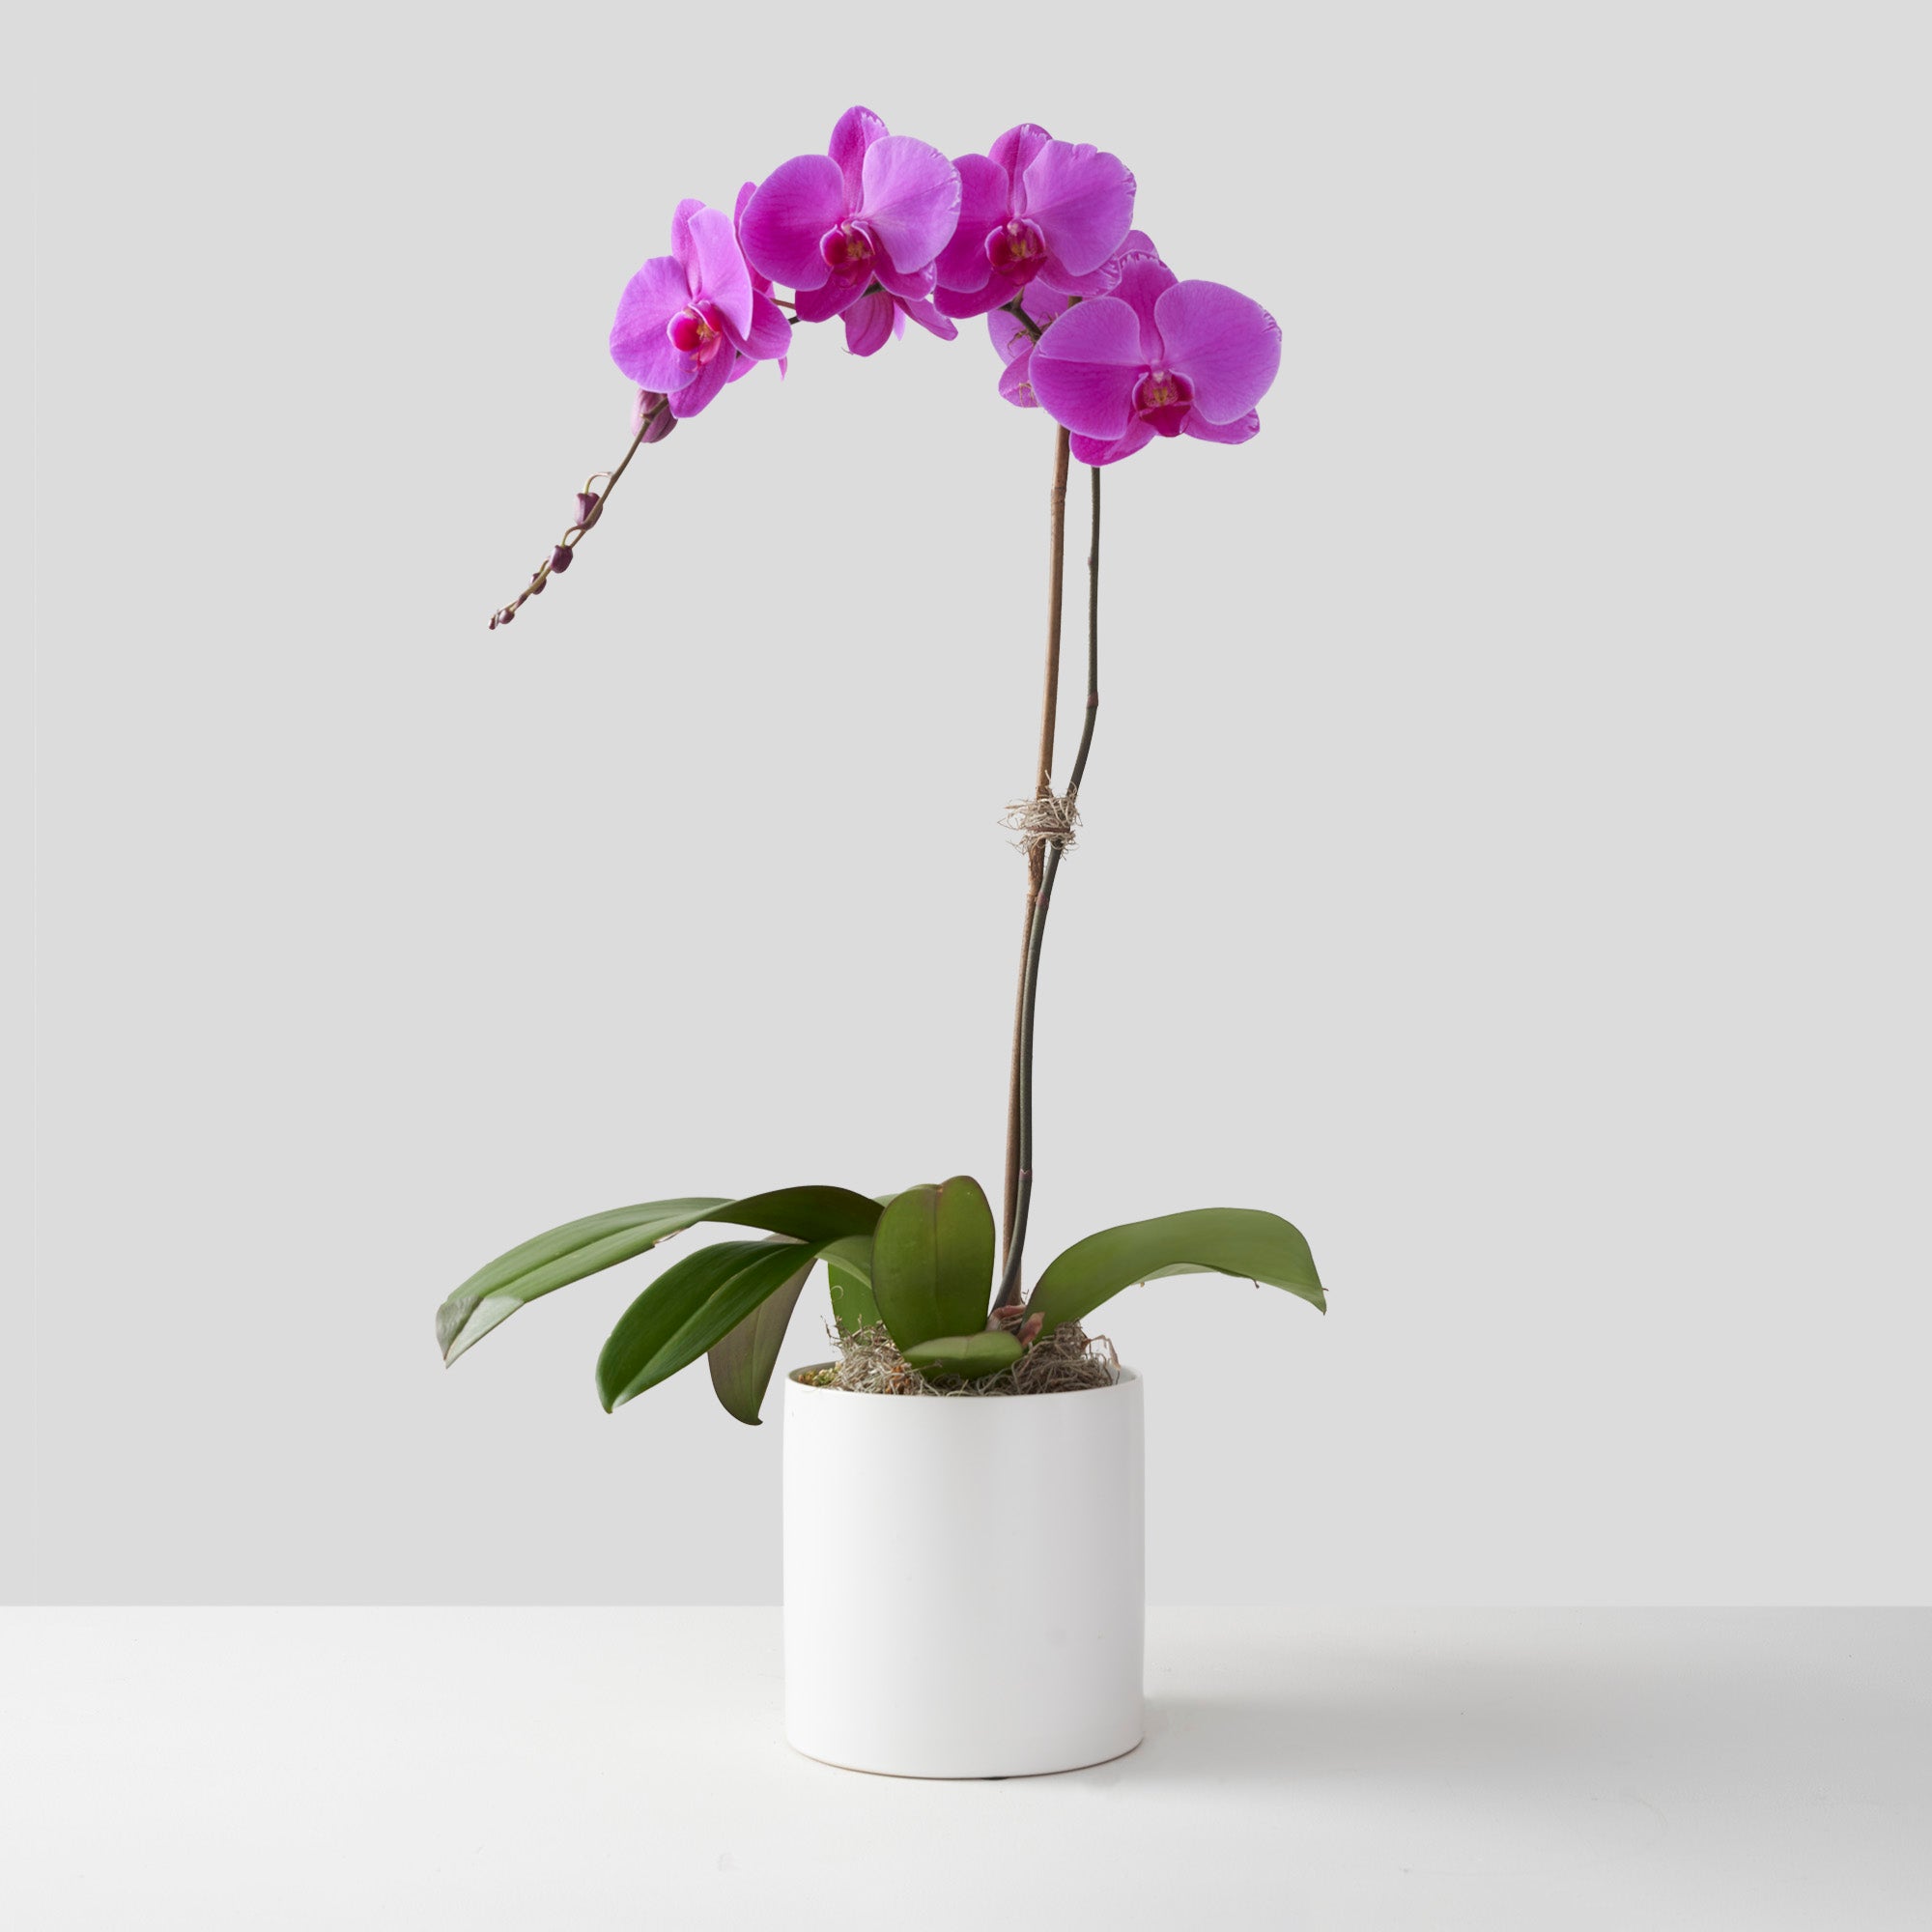  Fuchsia pink phalaenopsis orchid plant in white ceramic cylinder centered on white background.